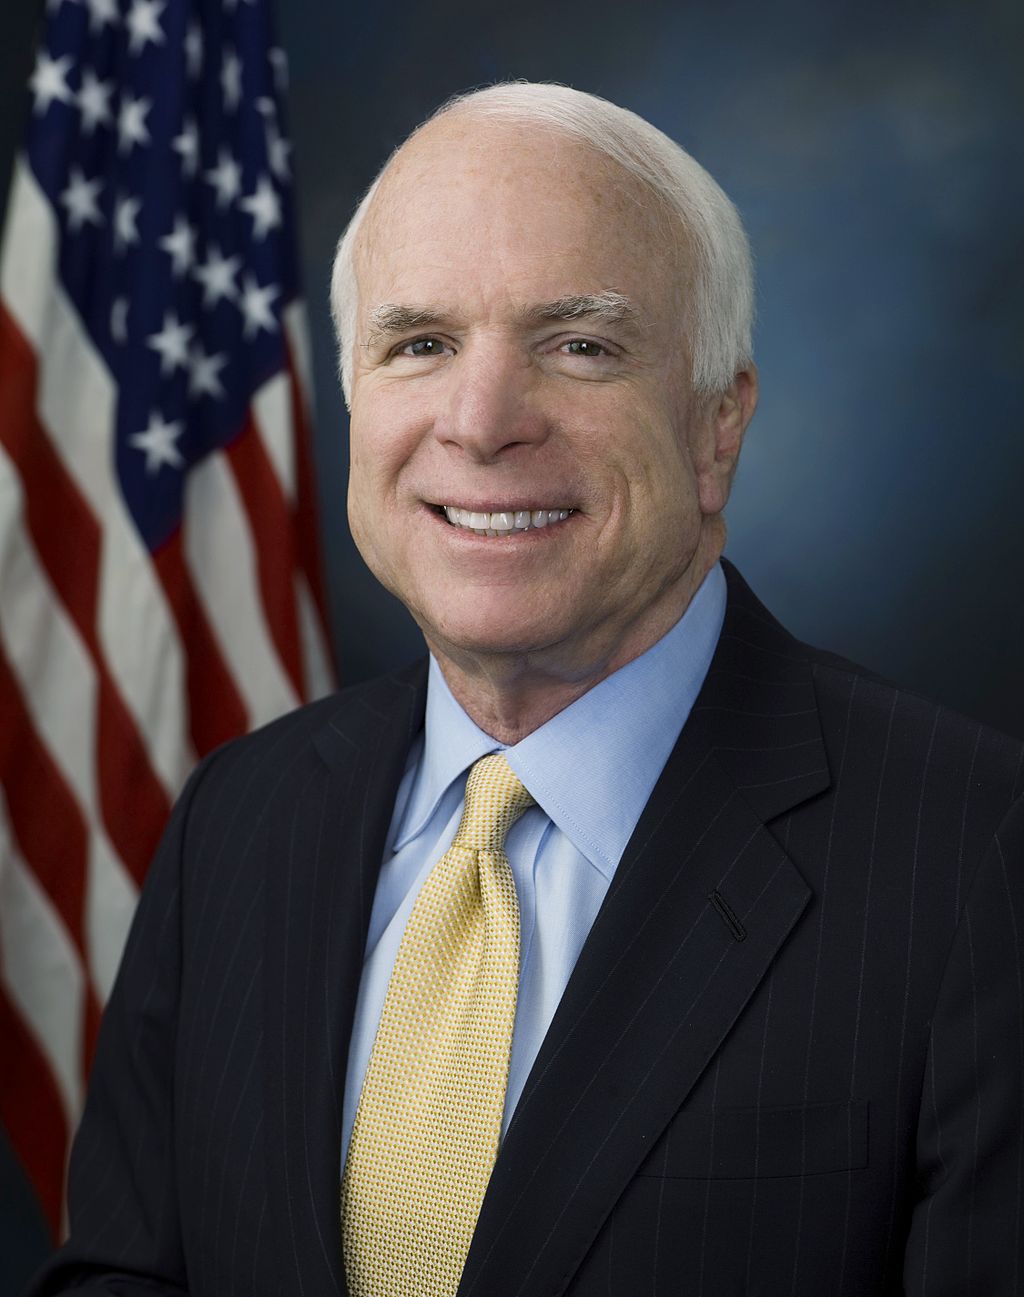 Atlantik-Brücke mourns the loss of Senator John McCain